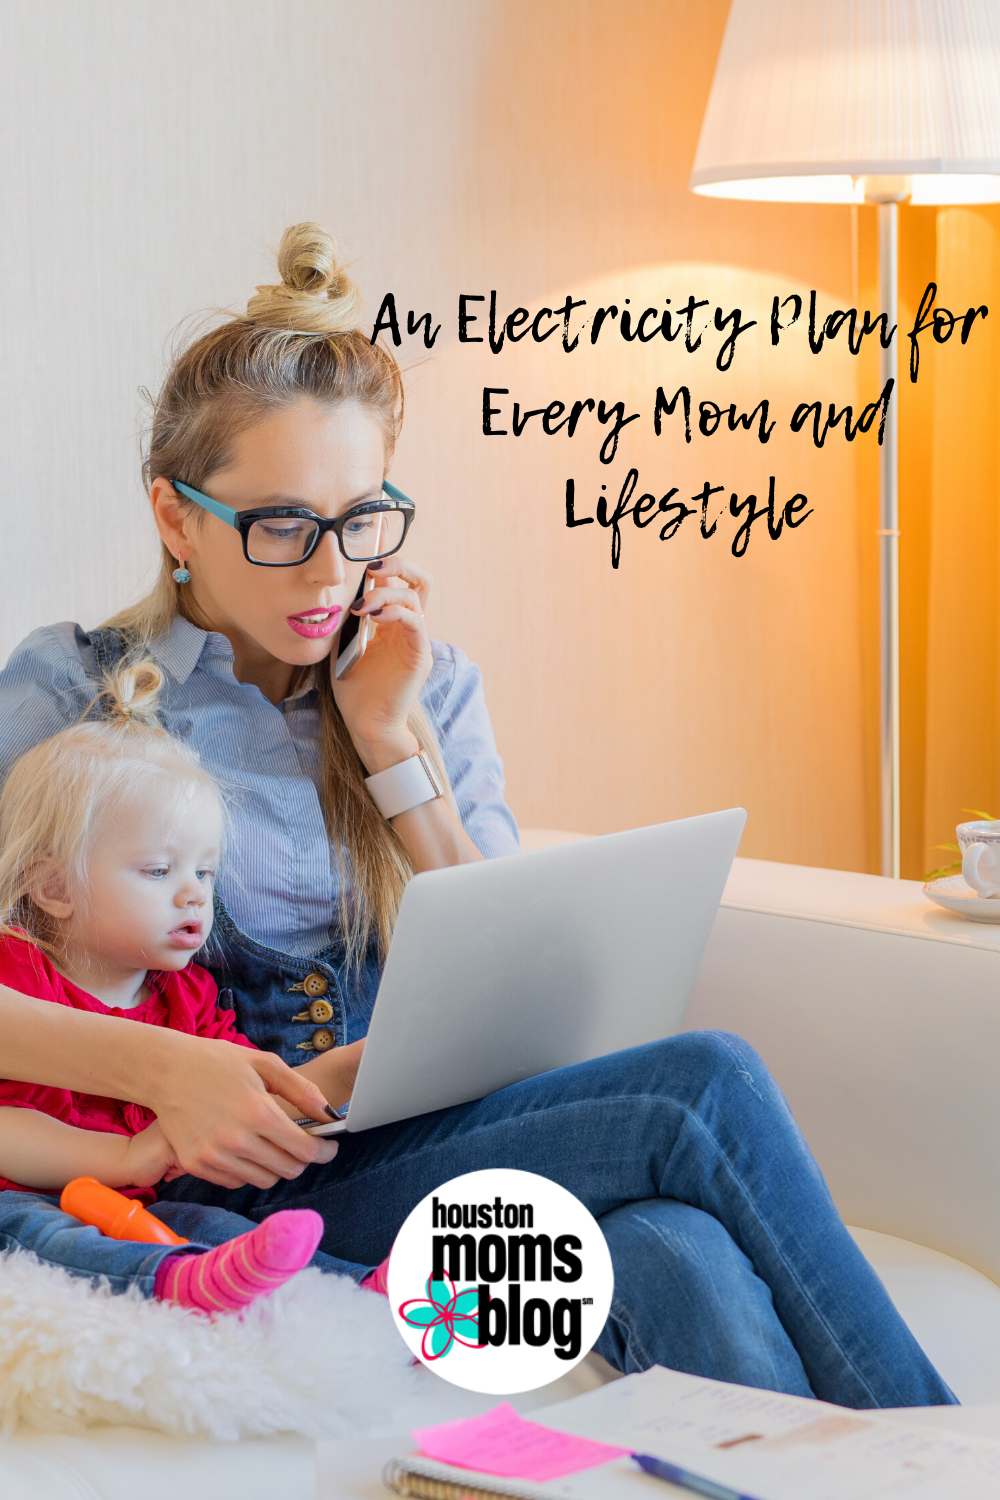 Houston Moms Blog "An Electricity Plan for Every Mom and Lifestyle" #houstonmomsblog #momsaroundhouston